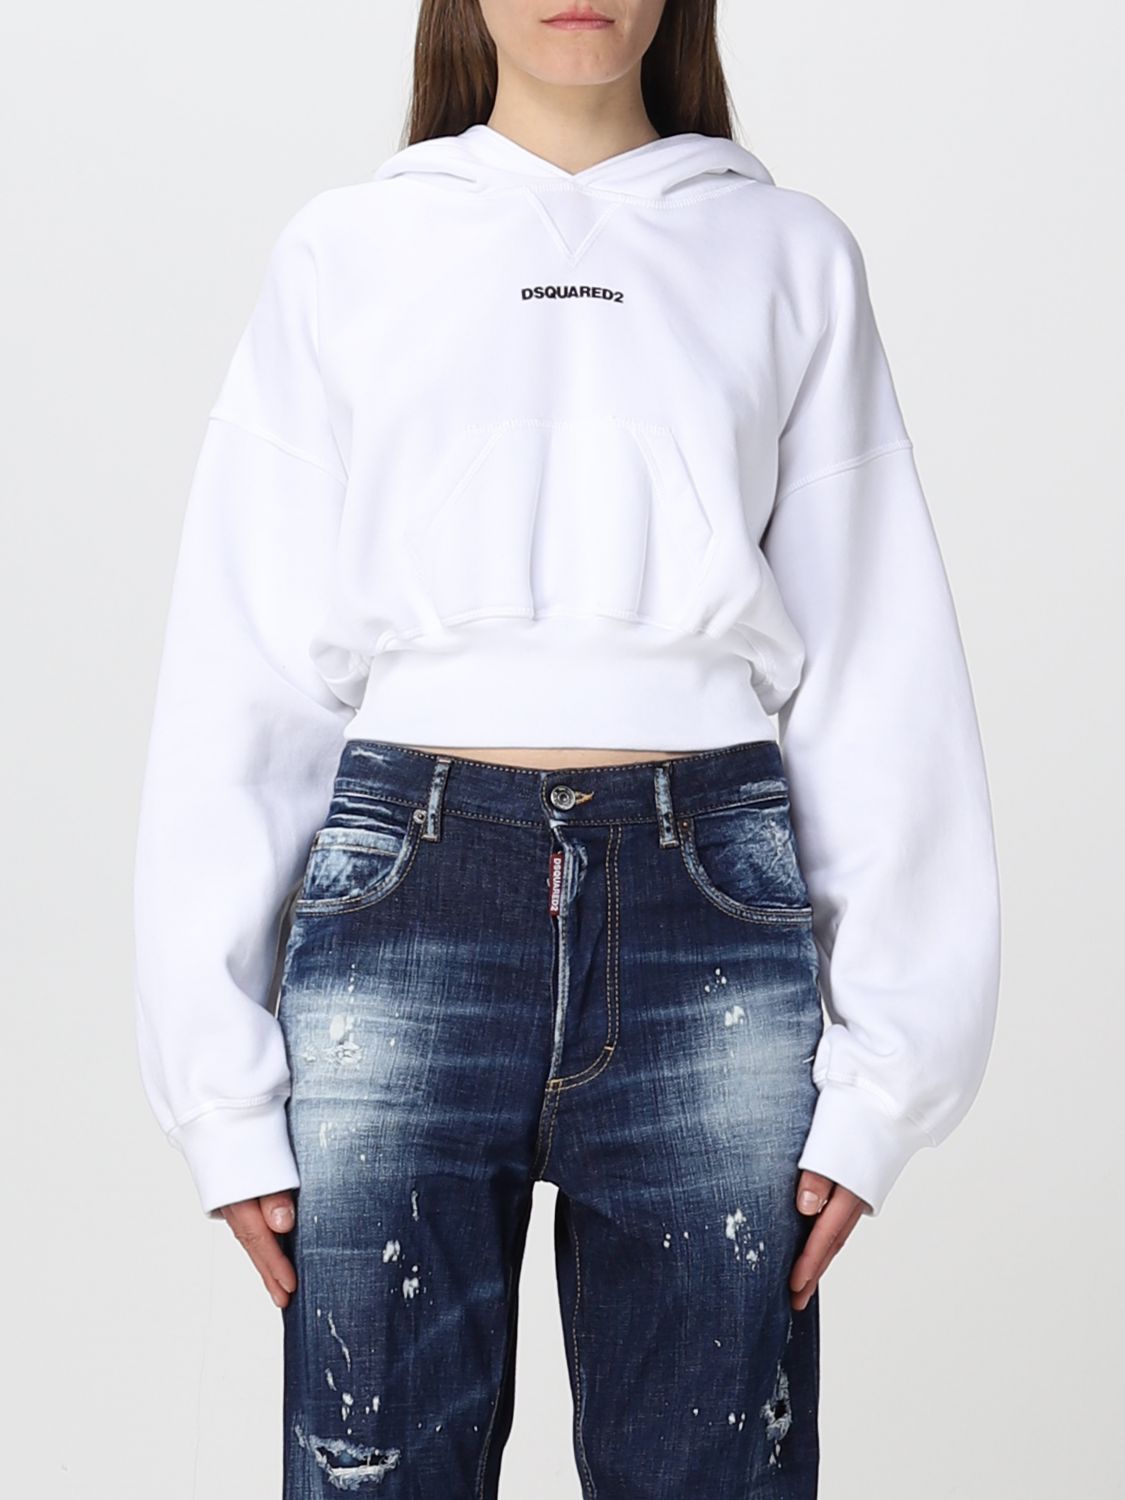 Onvoorziene omstandigheden kort kogel Dsquared2 Sweatshirt Damen Farbe Weiss In White | ModeSens